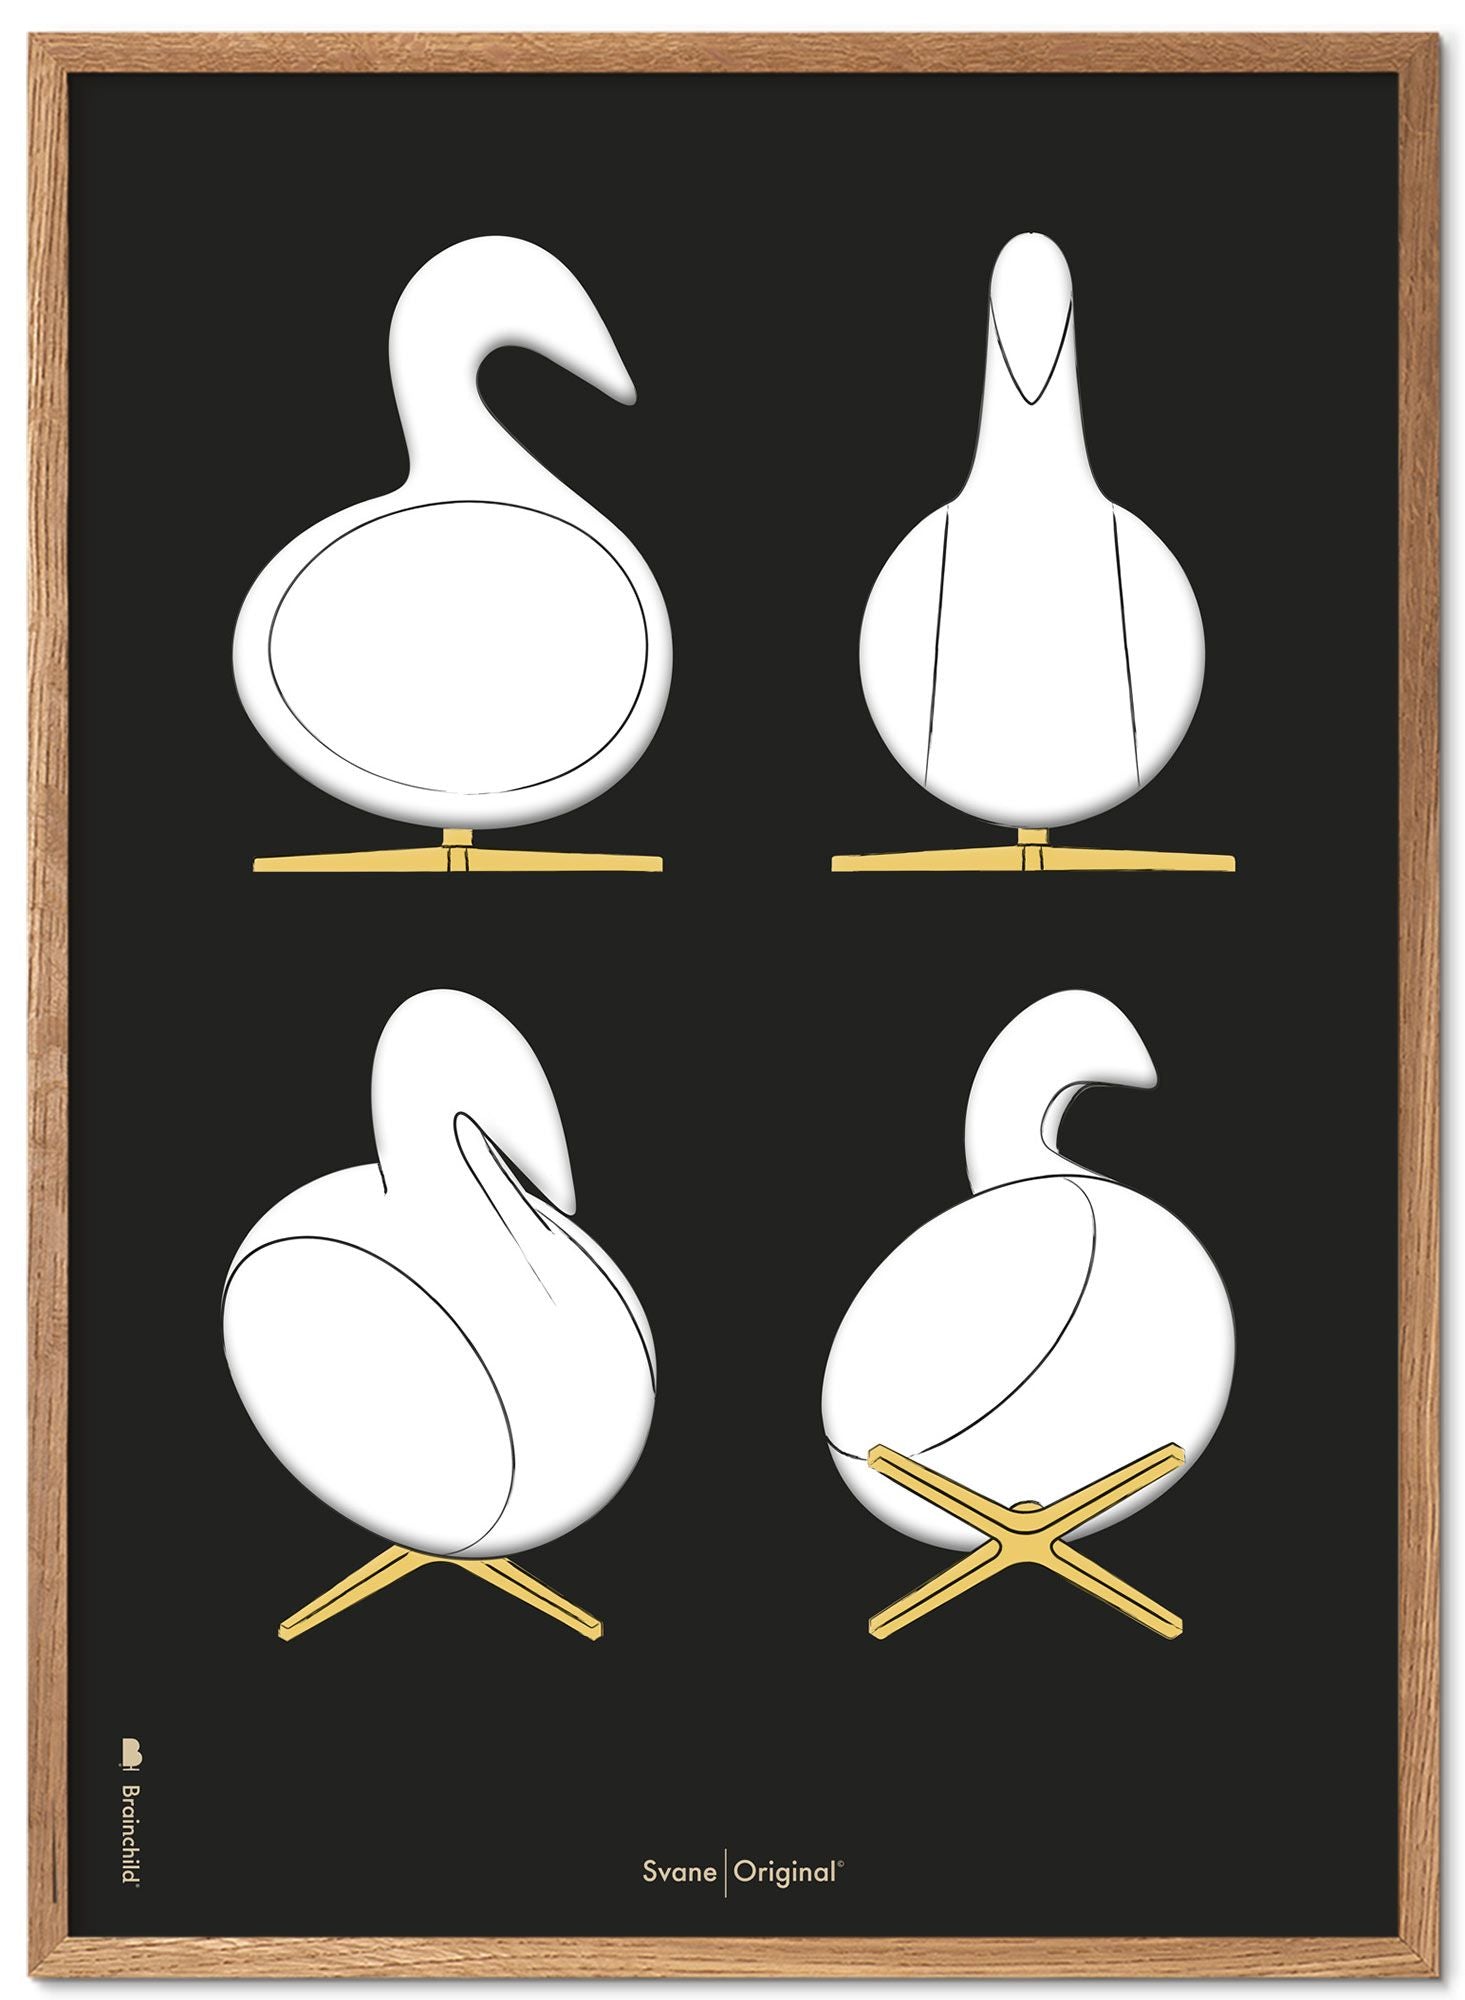 Brainchild Swan Design Sketches Poster Frame Made Of Light Wood 50x70 Cm, Black Background